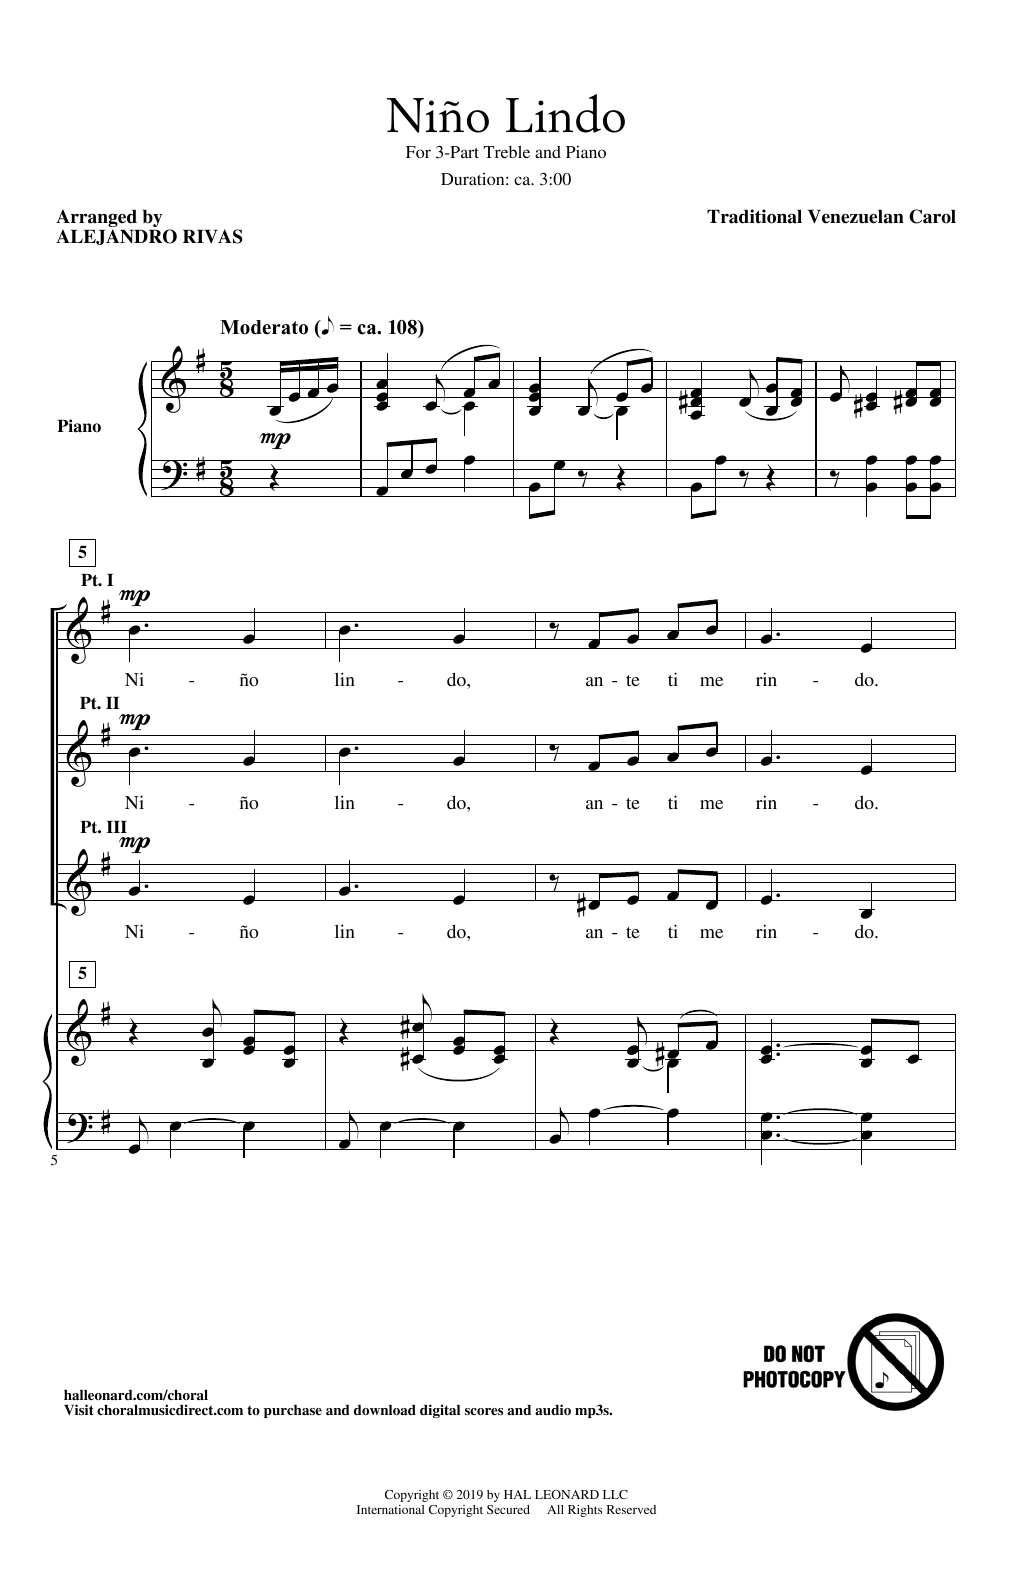 Traditional Venezuelan Carol Nino Lindo (arr. Alejandro Rivas) Sheet Music Notes & Chords for 3-Part Treble Choir - Download or Print PDF